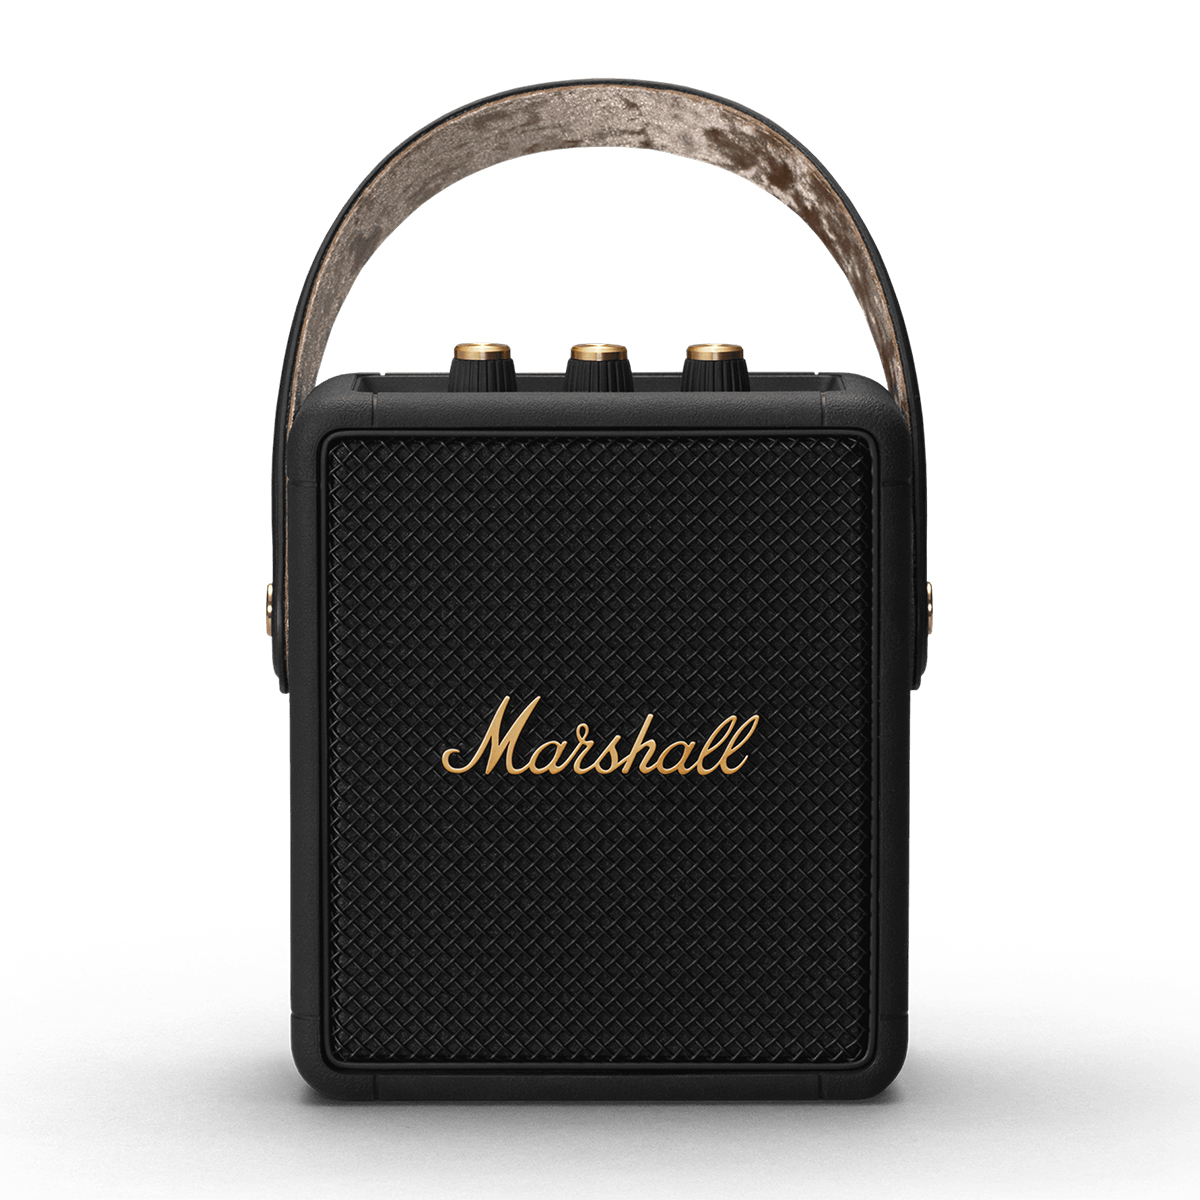 Loa Marshall Stockwell 2 Black and Brass